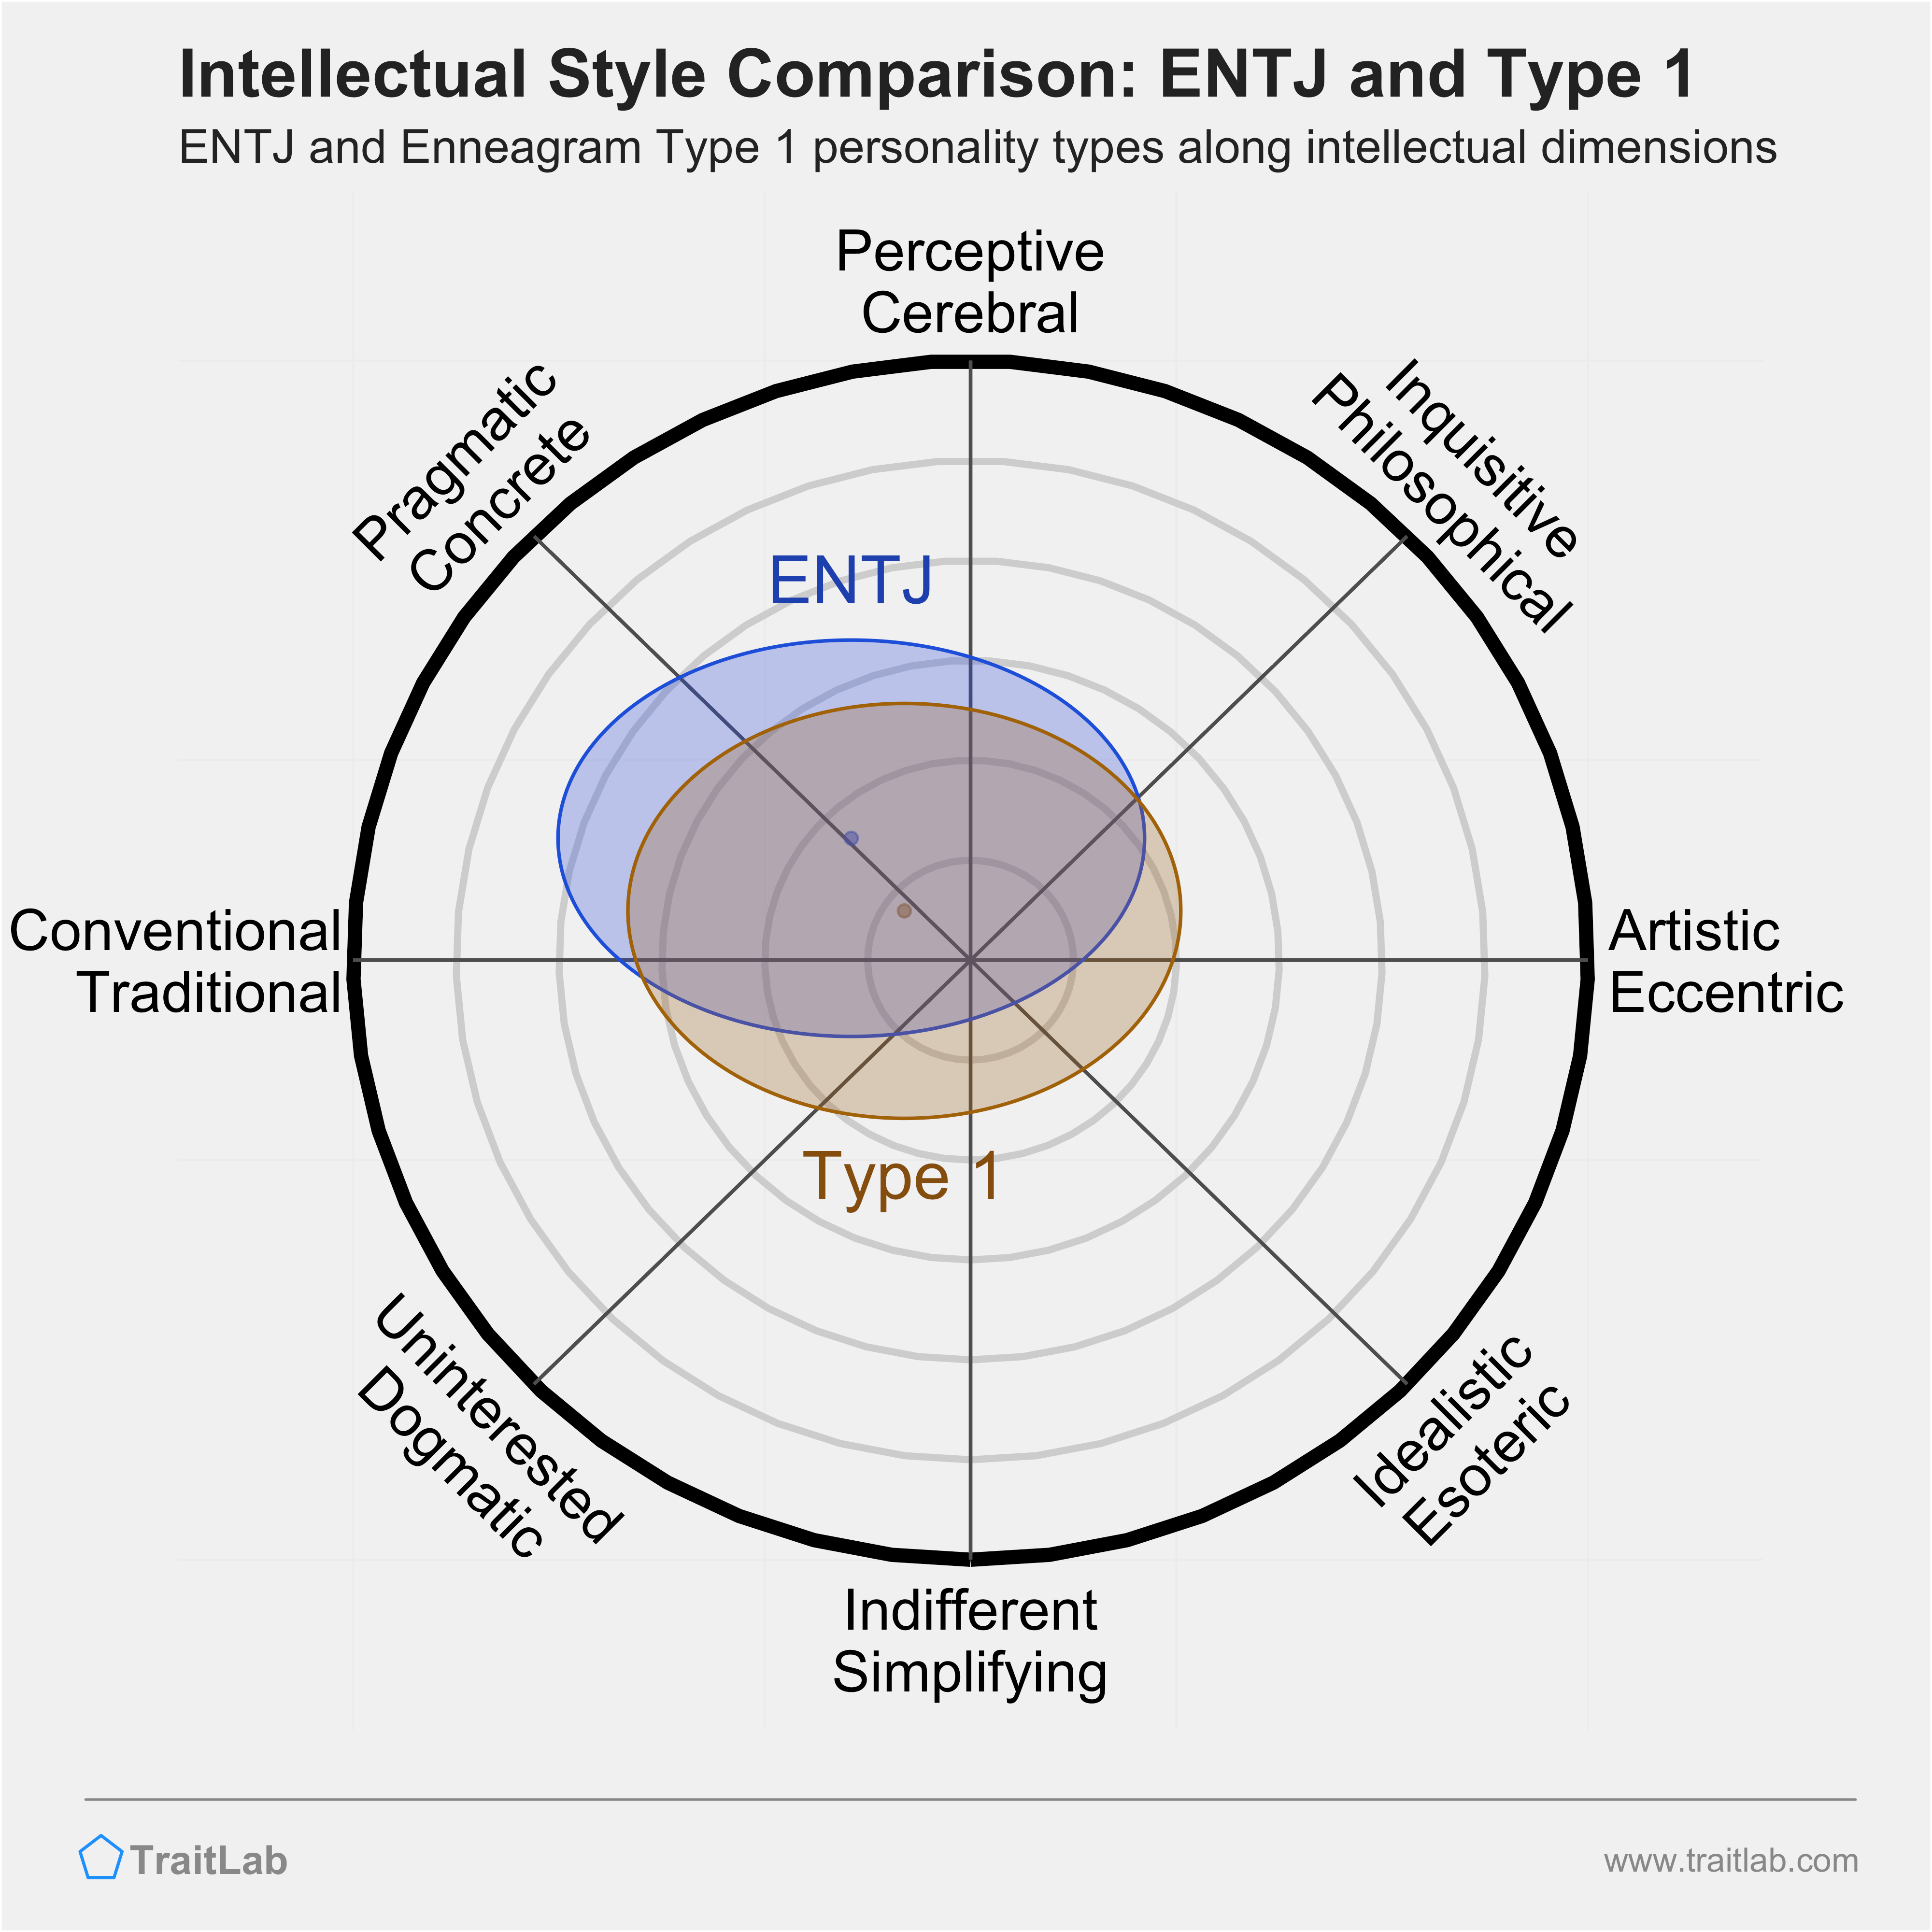 ENTJ and Type 1 comparison across intellectual dimensions